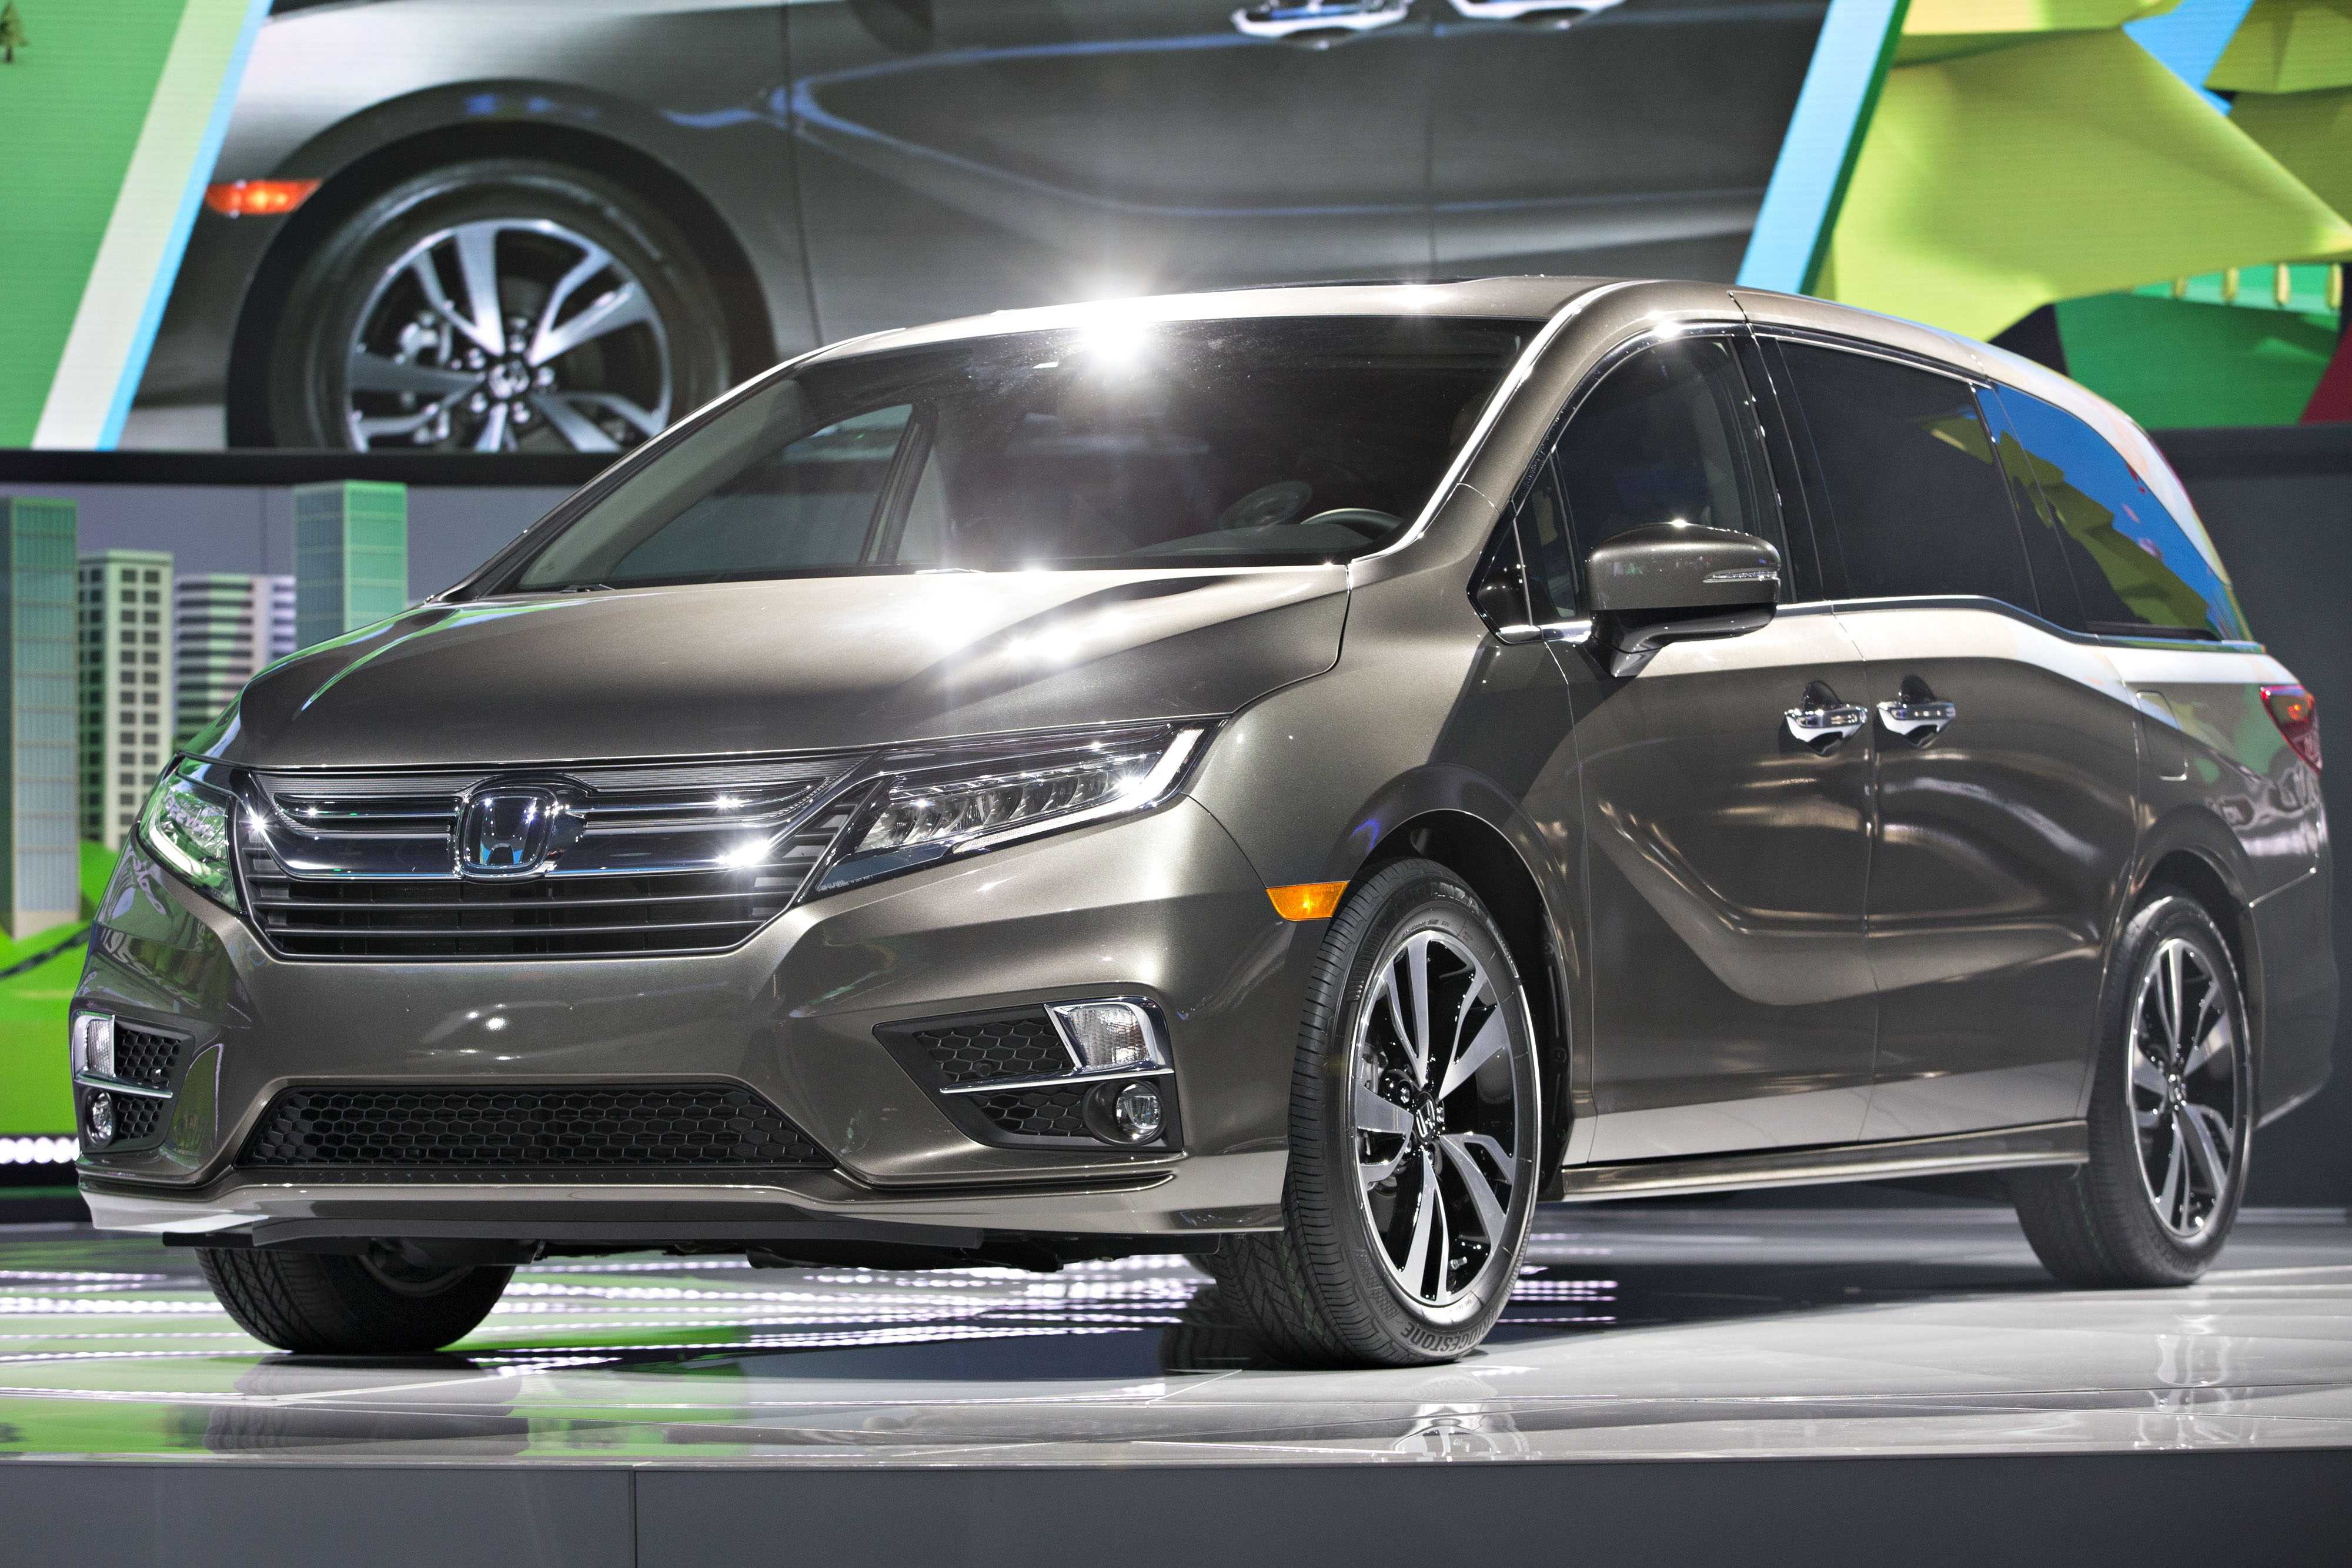 Honda recalls 900,000 Odyssey minivans